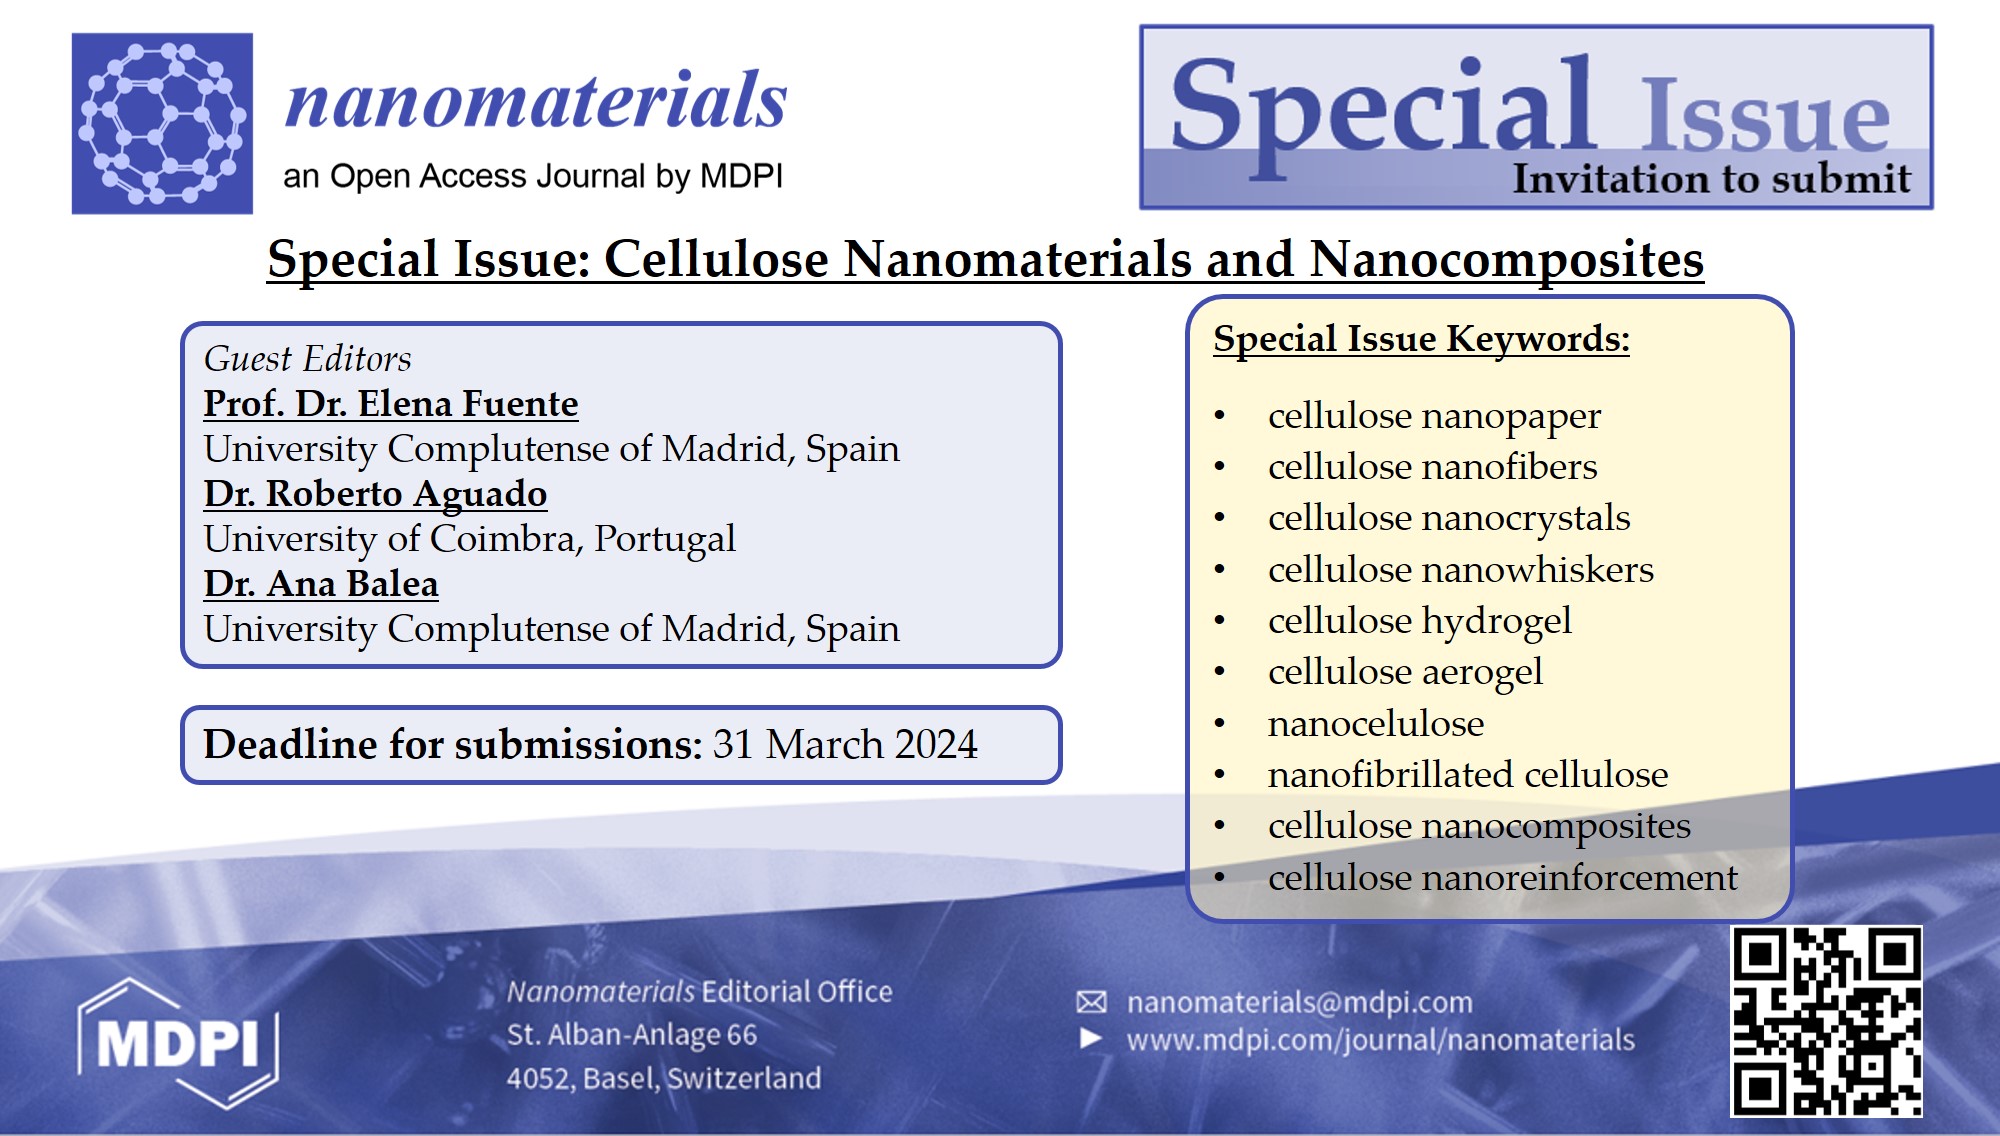  Special Issue "Cellulose Nanomaterials and Nanocomposites" en Nanomaterials